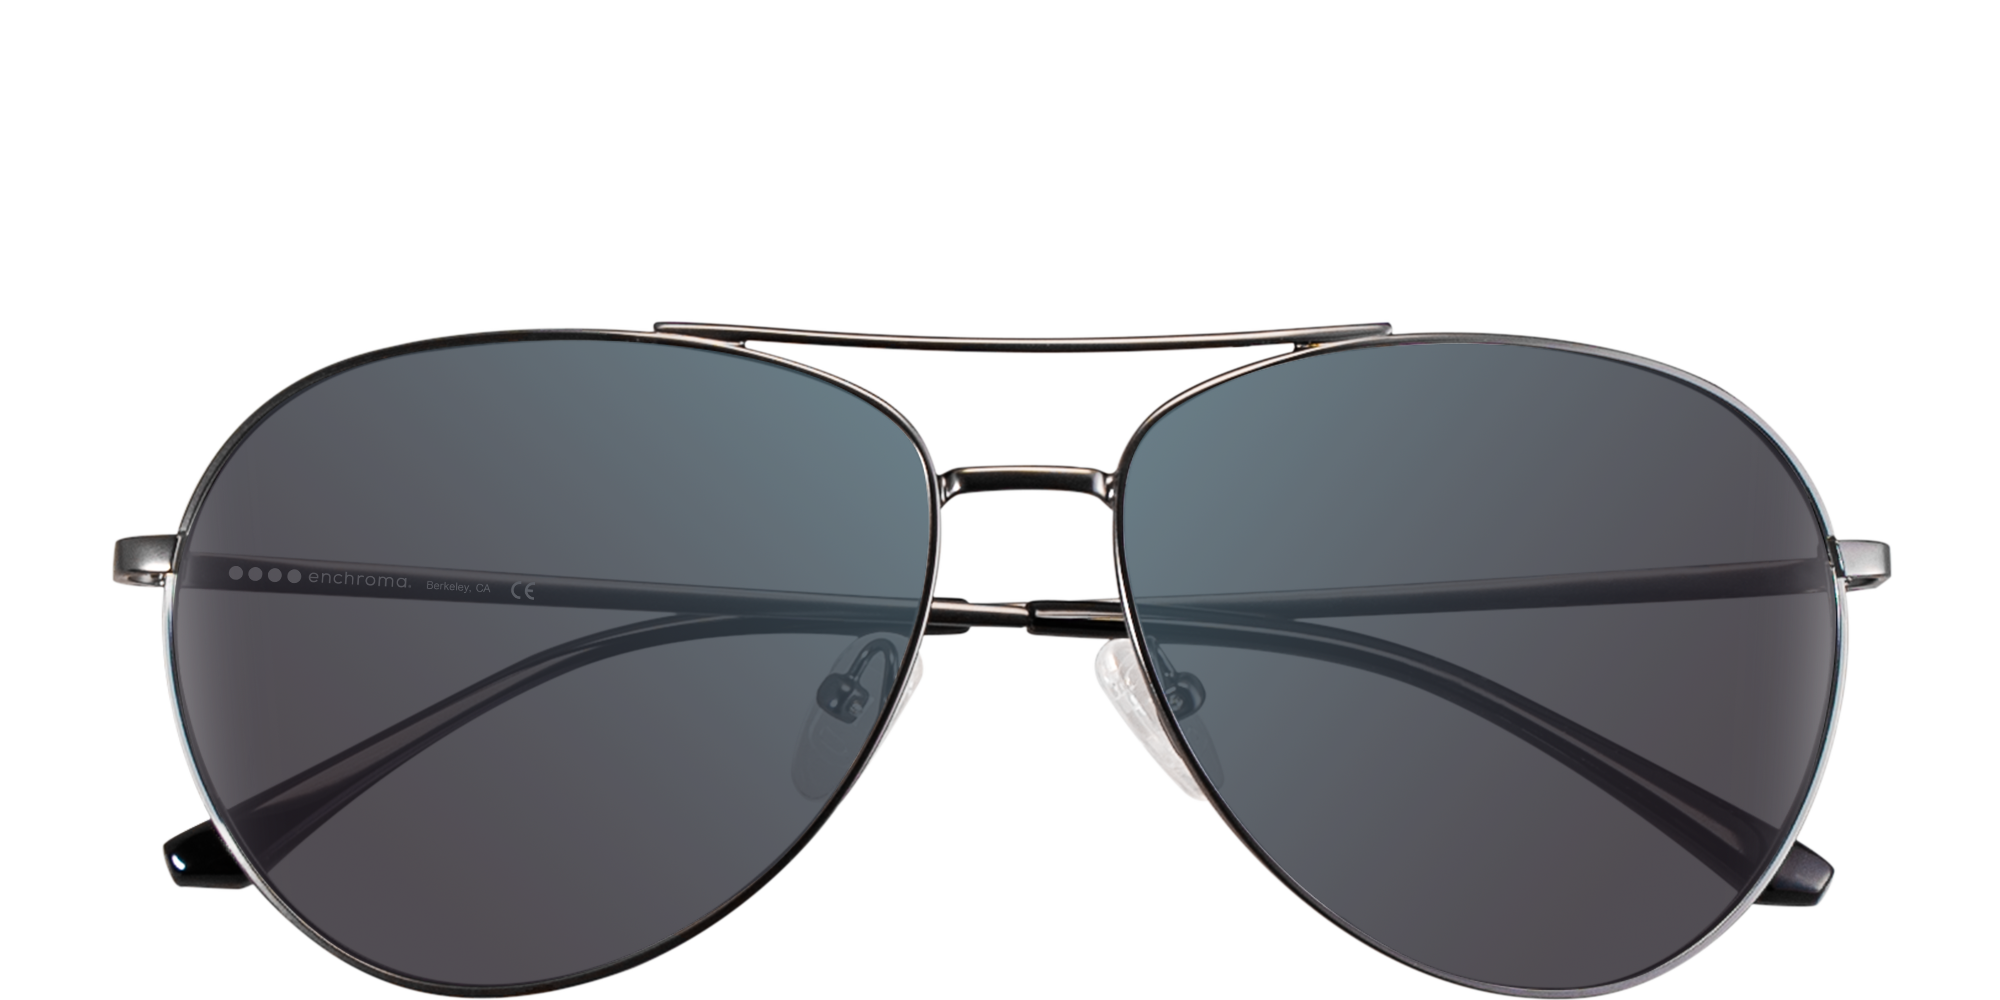 Rockridge Polarized Deutan Color Blind Glasses|Premium, Timeless Style